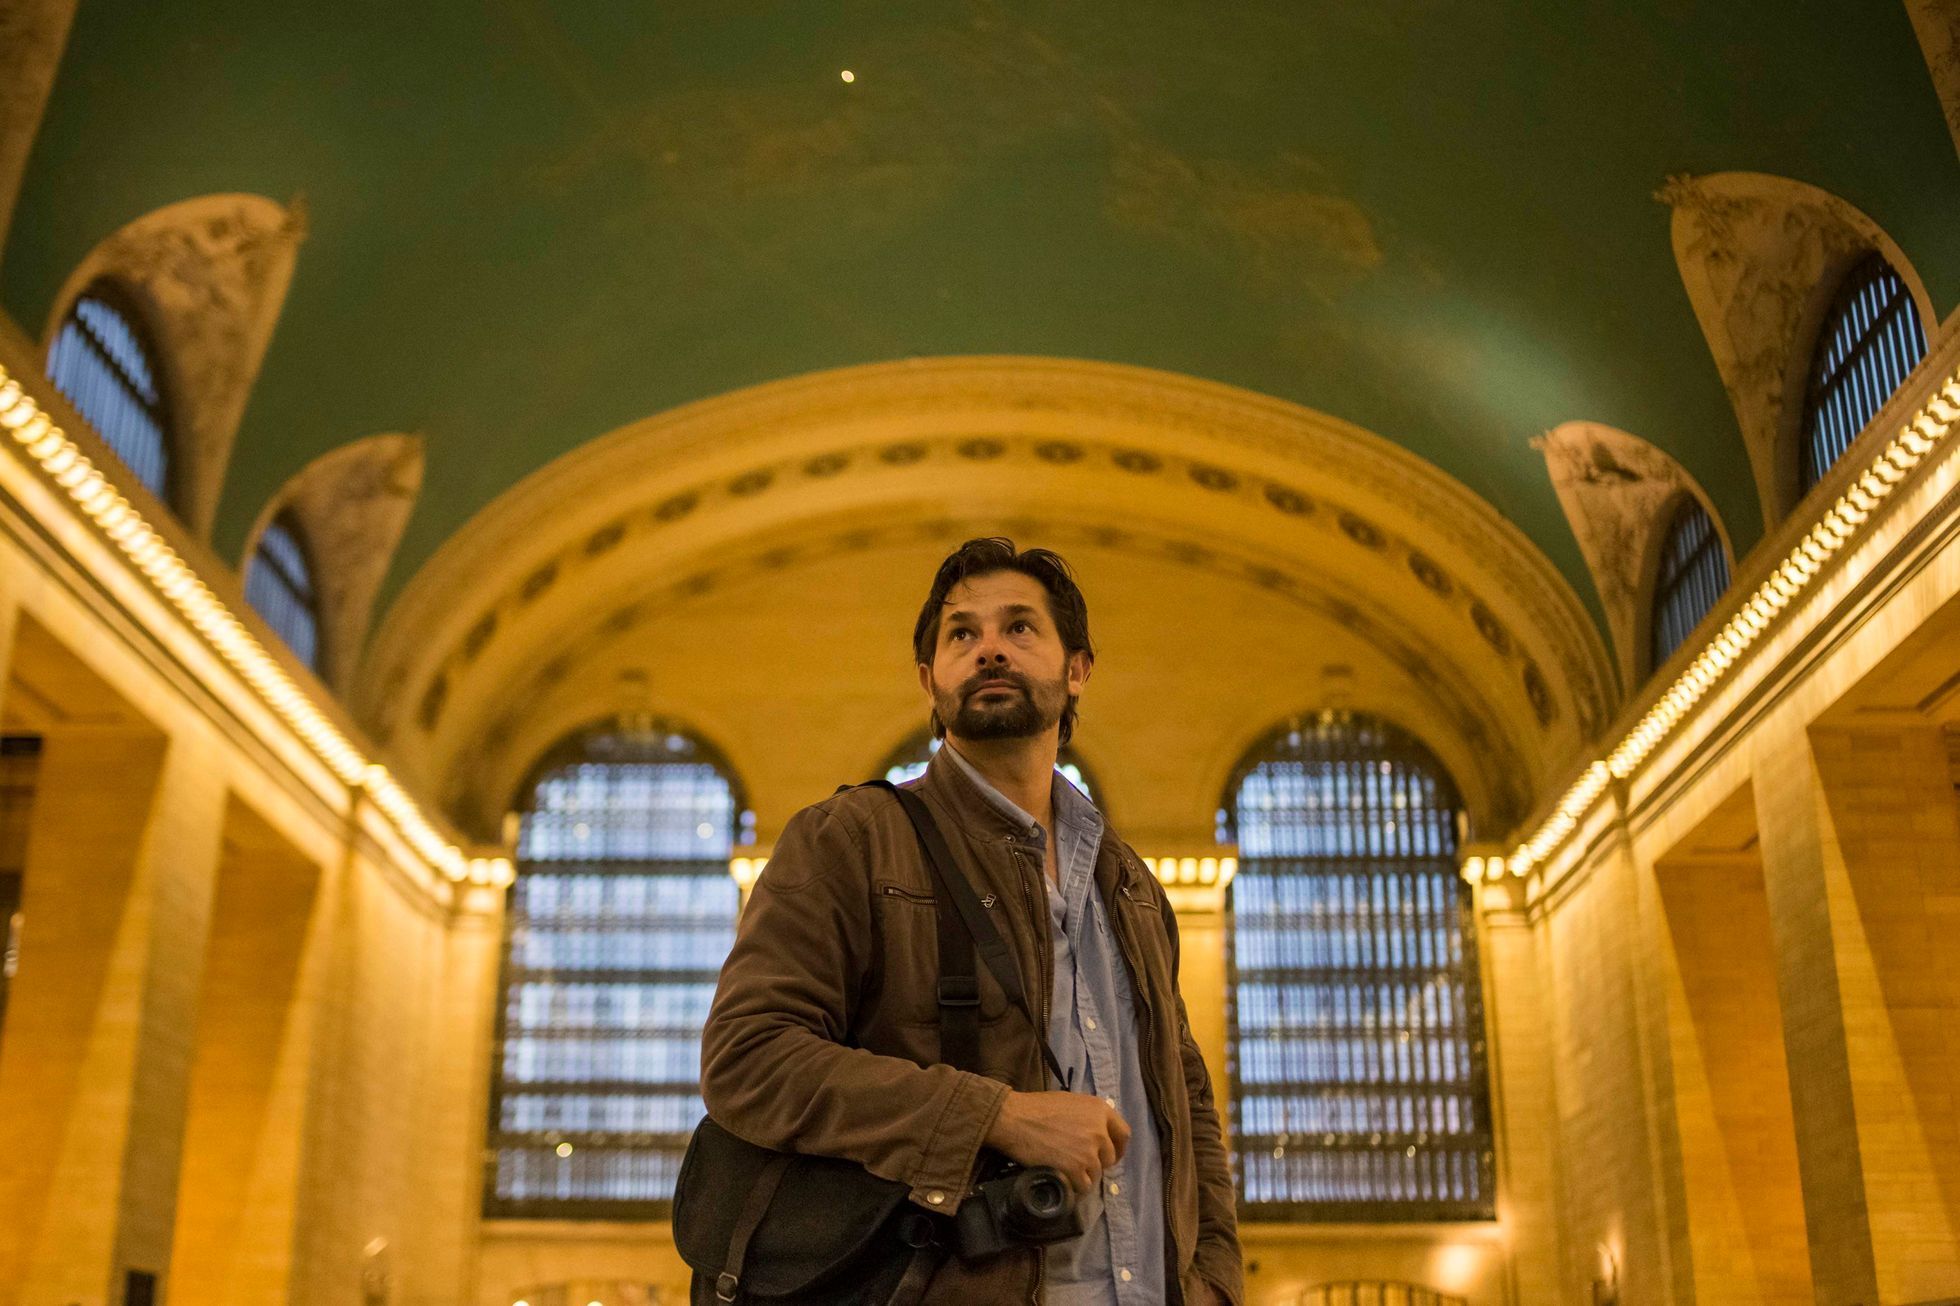 Australian freelance photojournalist Daniel Berehulak poses for a portrait in Grand Central Terminal in New York